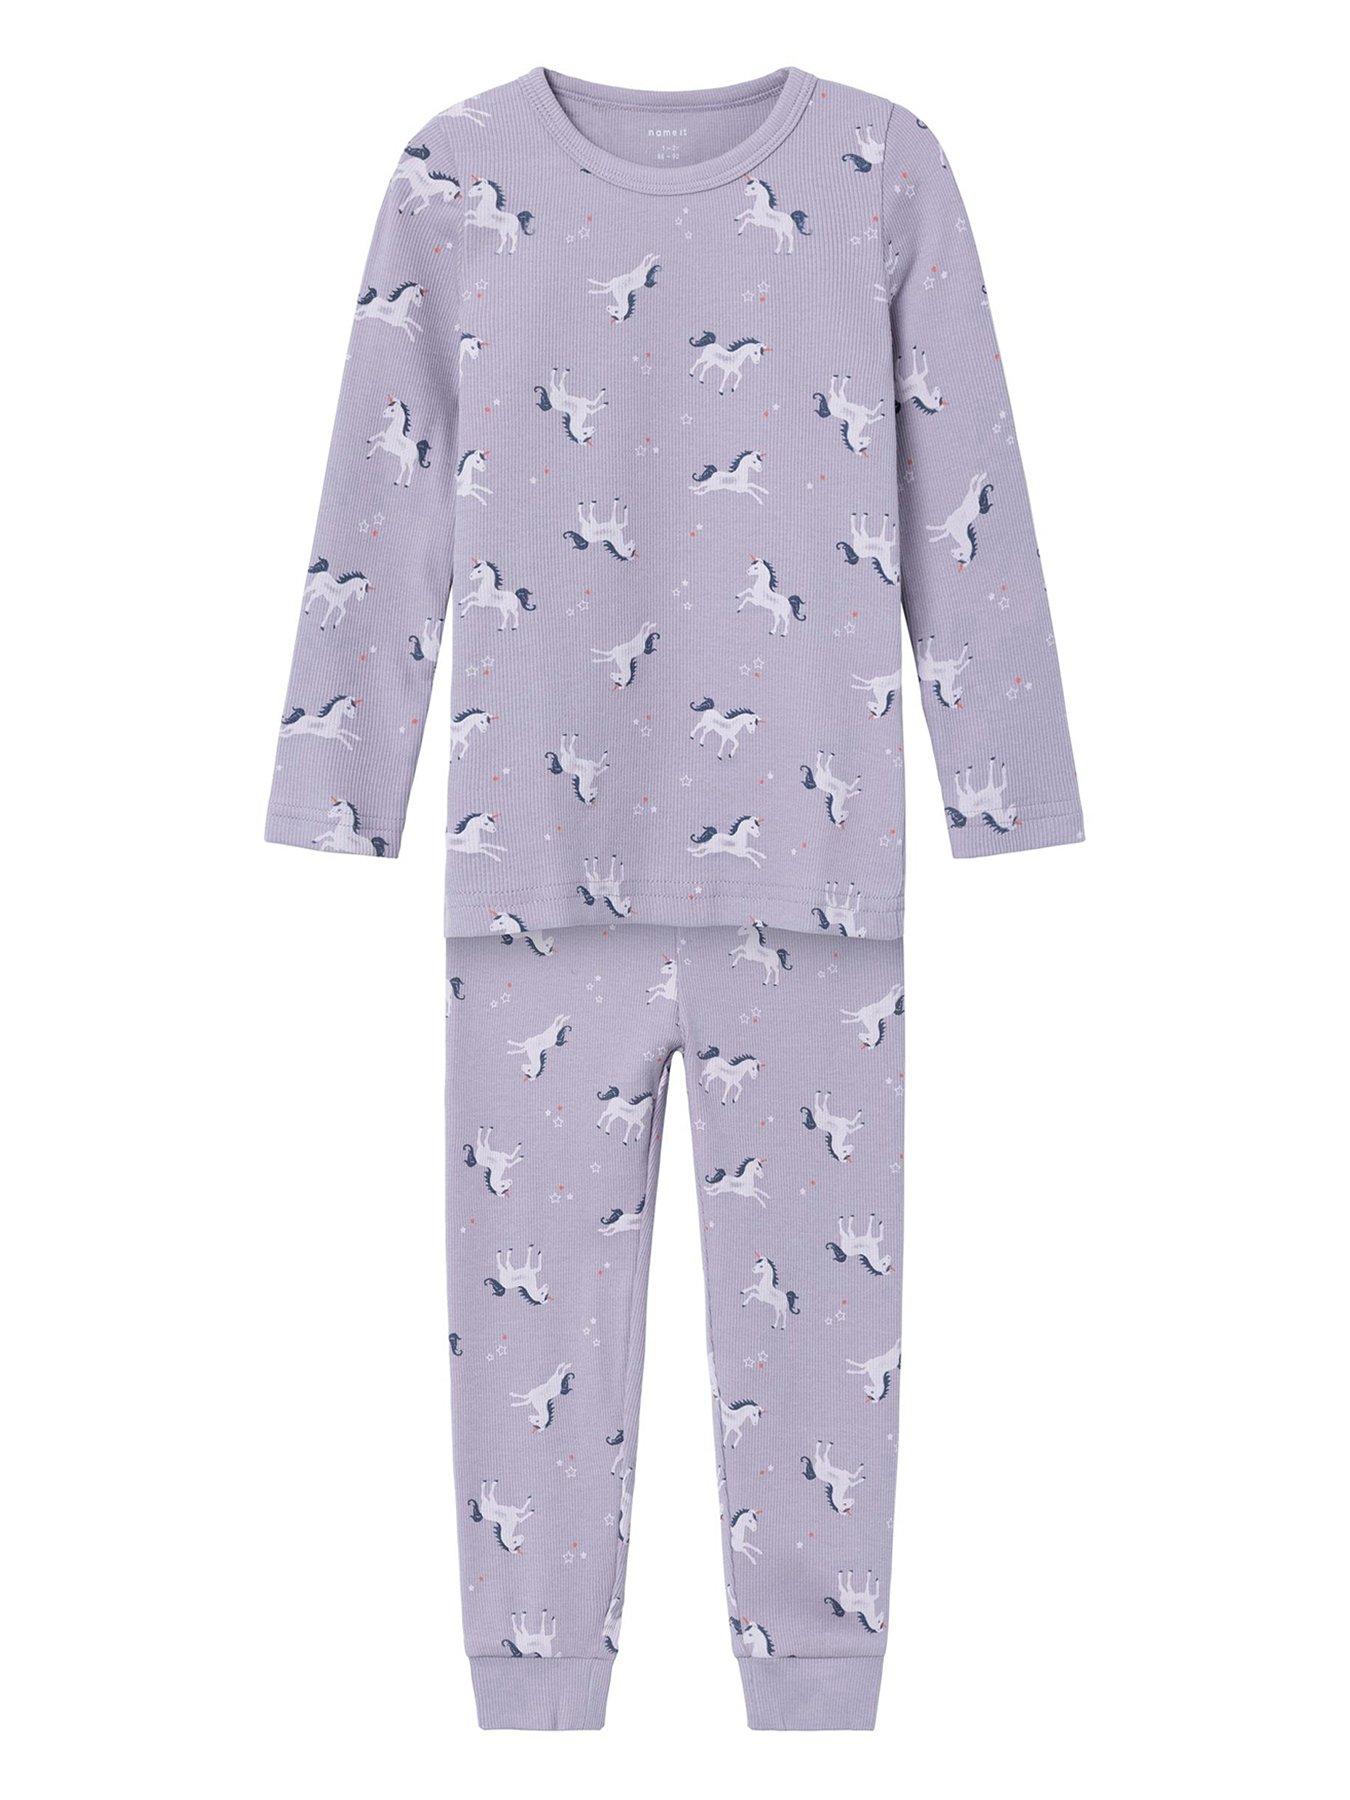 https://media.very.co.uk/i/very/VPXG2_SQ1_0000000039_PURPLE_SLf/name-it-mini-girls-unicorn-rib-pyjamas-lavender-aura.jpg?$180x240_retinamobilex2$